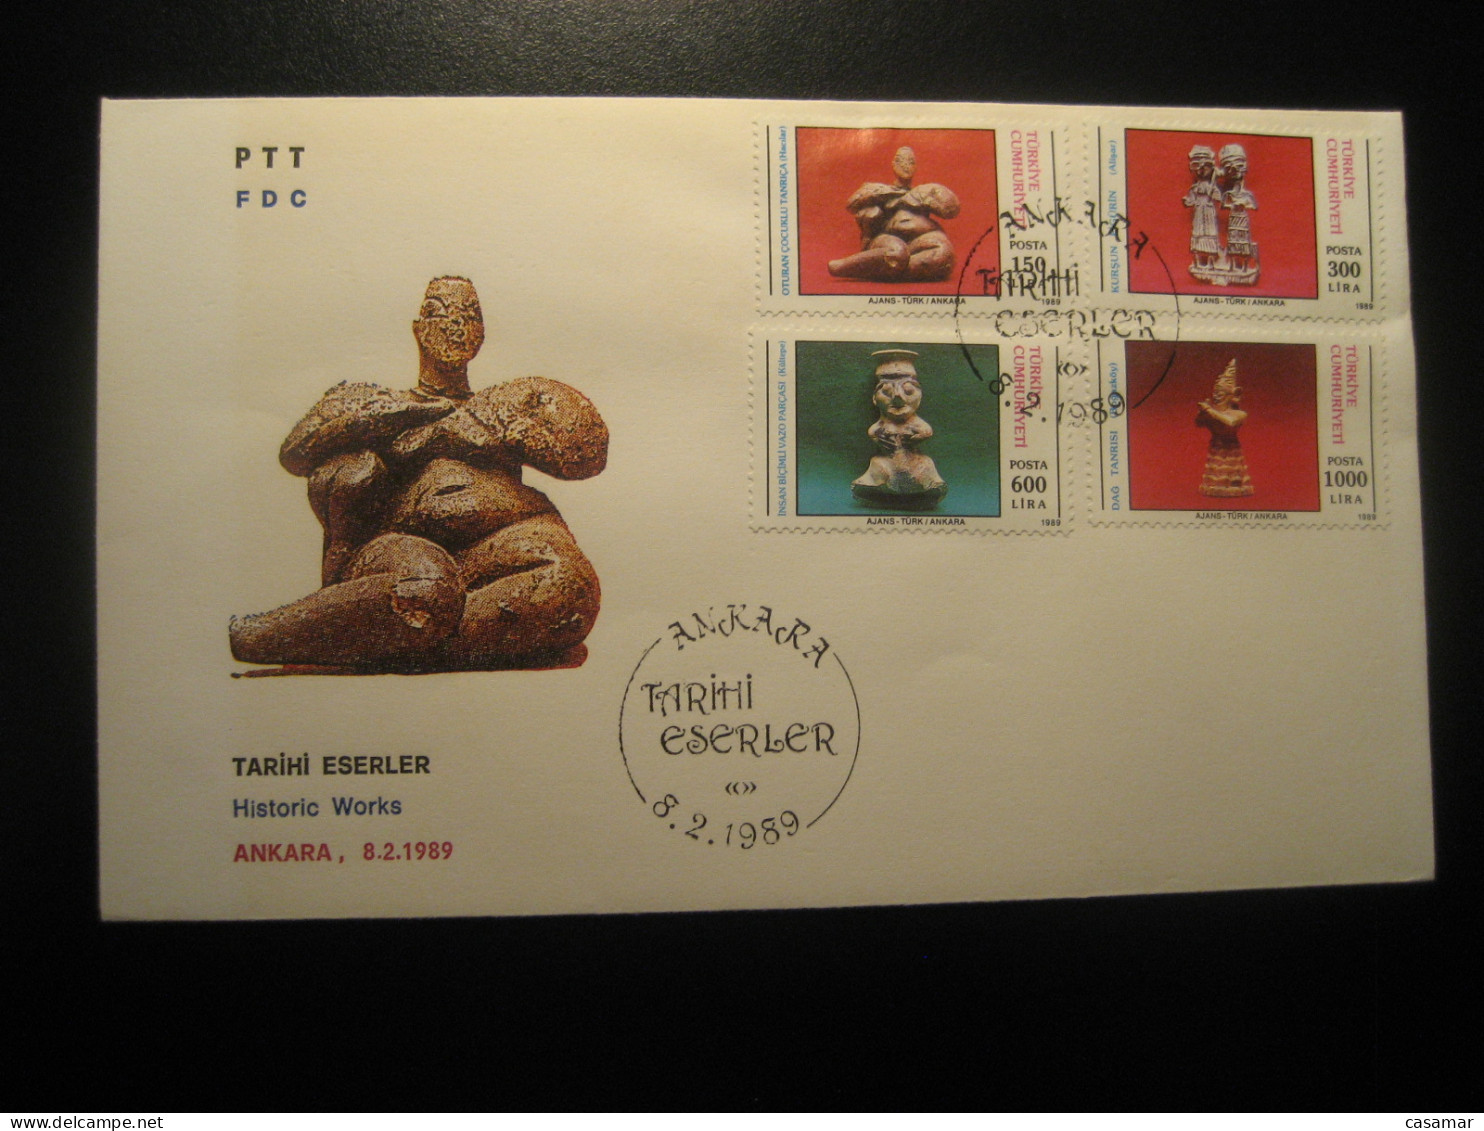 ANKARA 1989 Historic Works FDC Cancel Cover TURKEY - Lettres & Documents